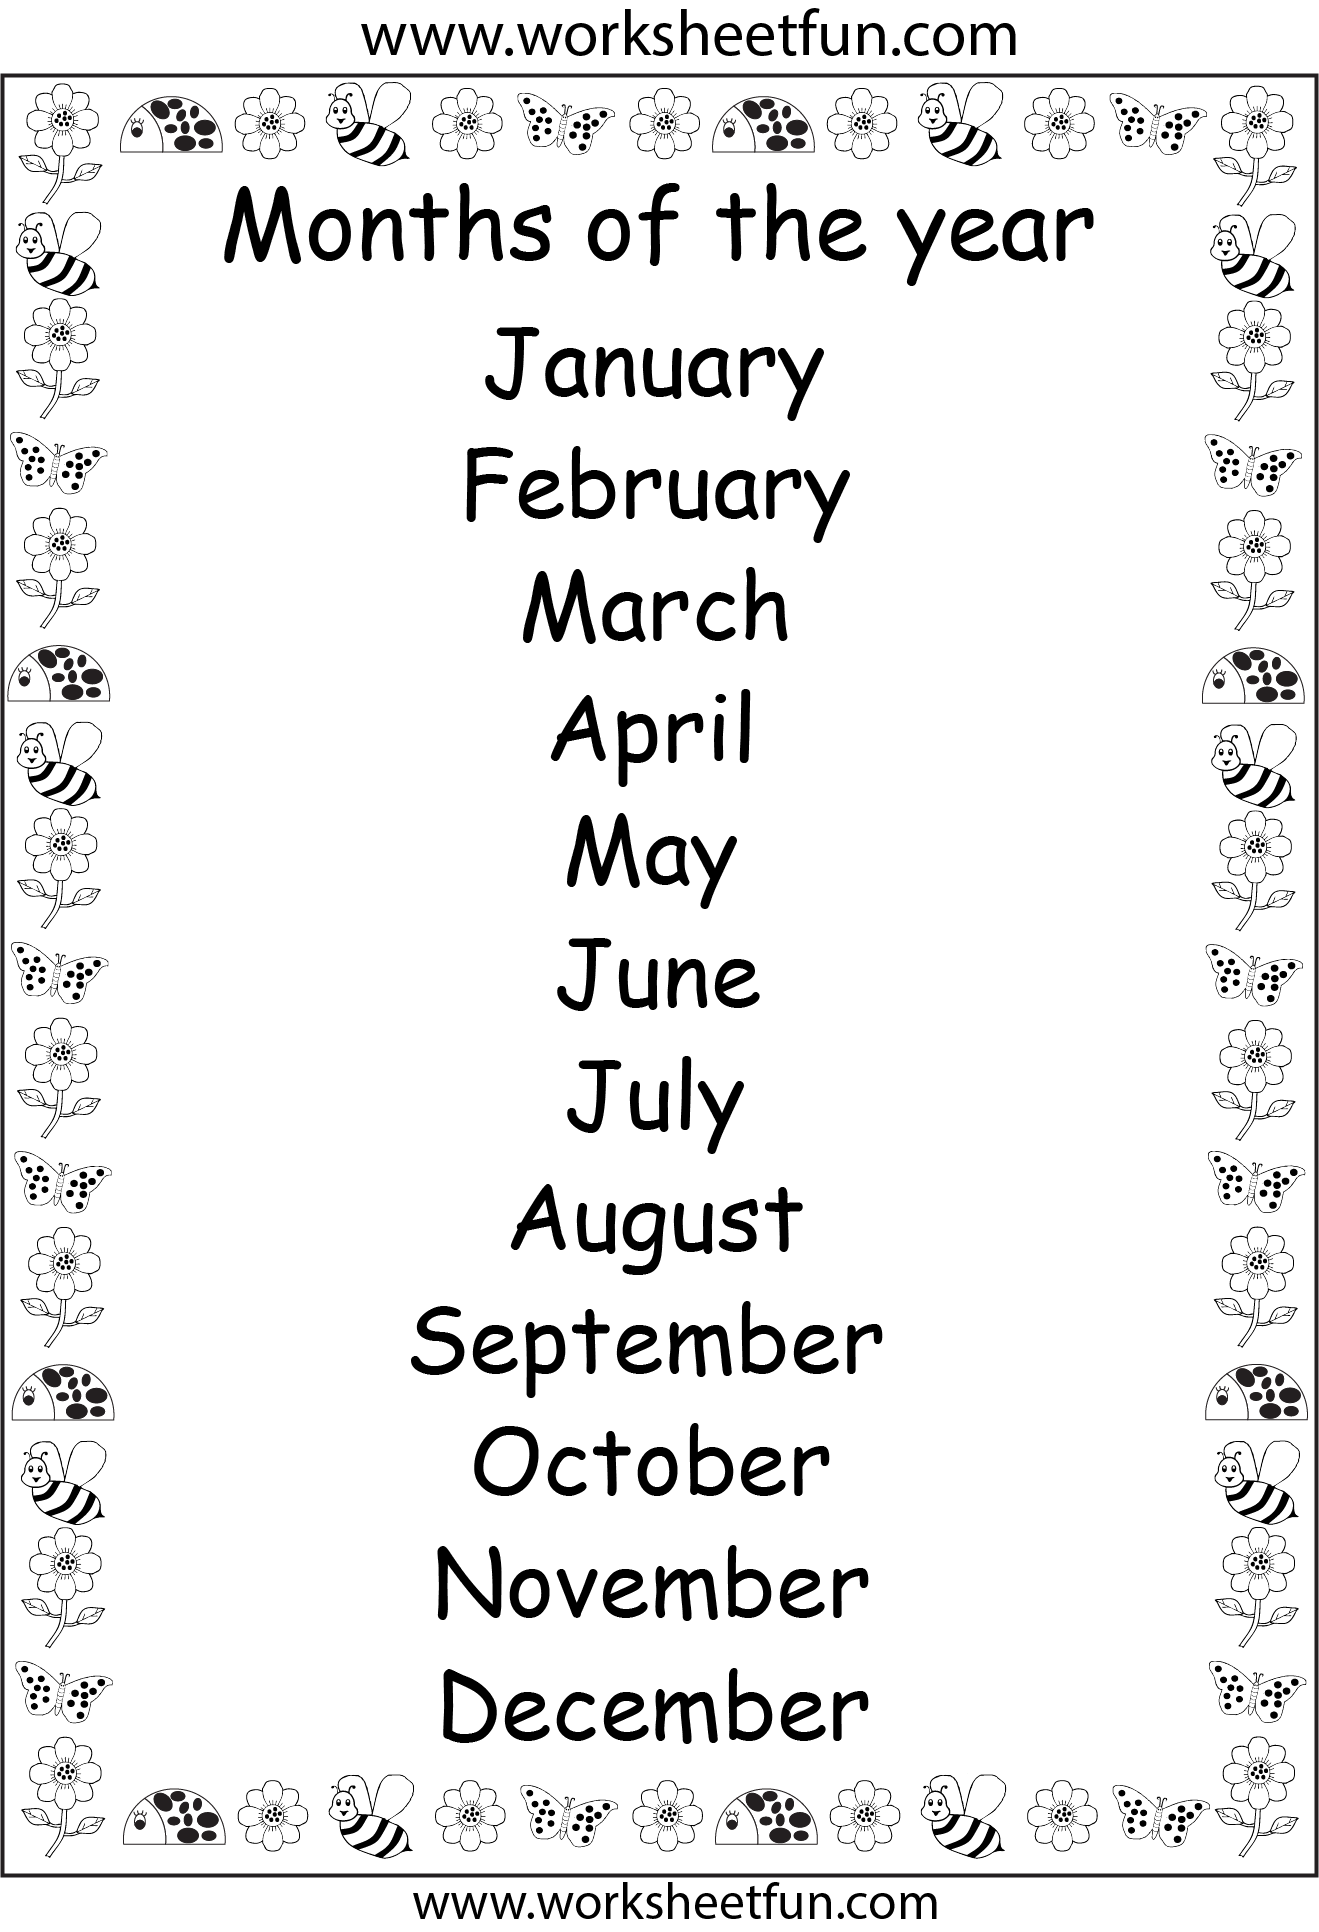 months-of-the-year-printable-chart-free-printable-worksheets-worksheetfun